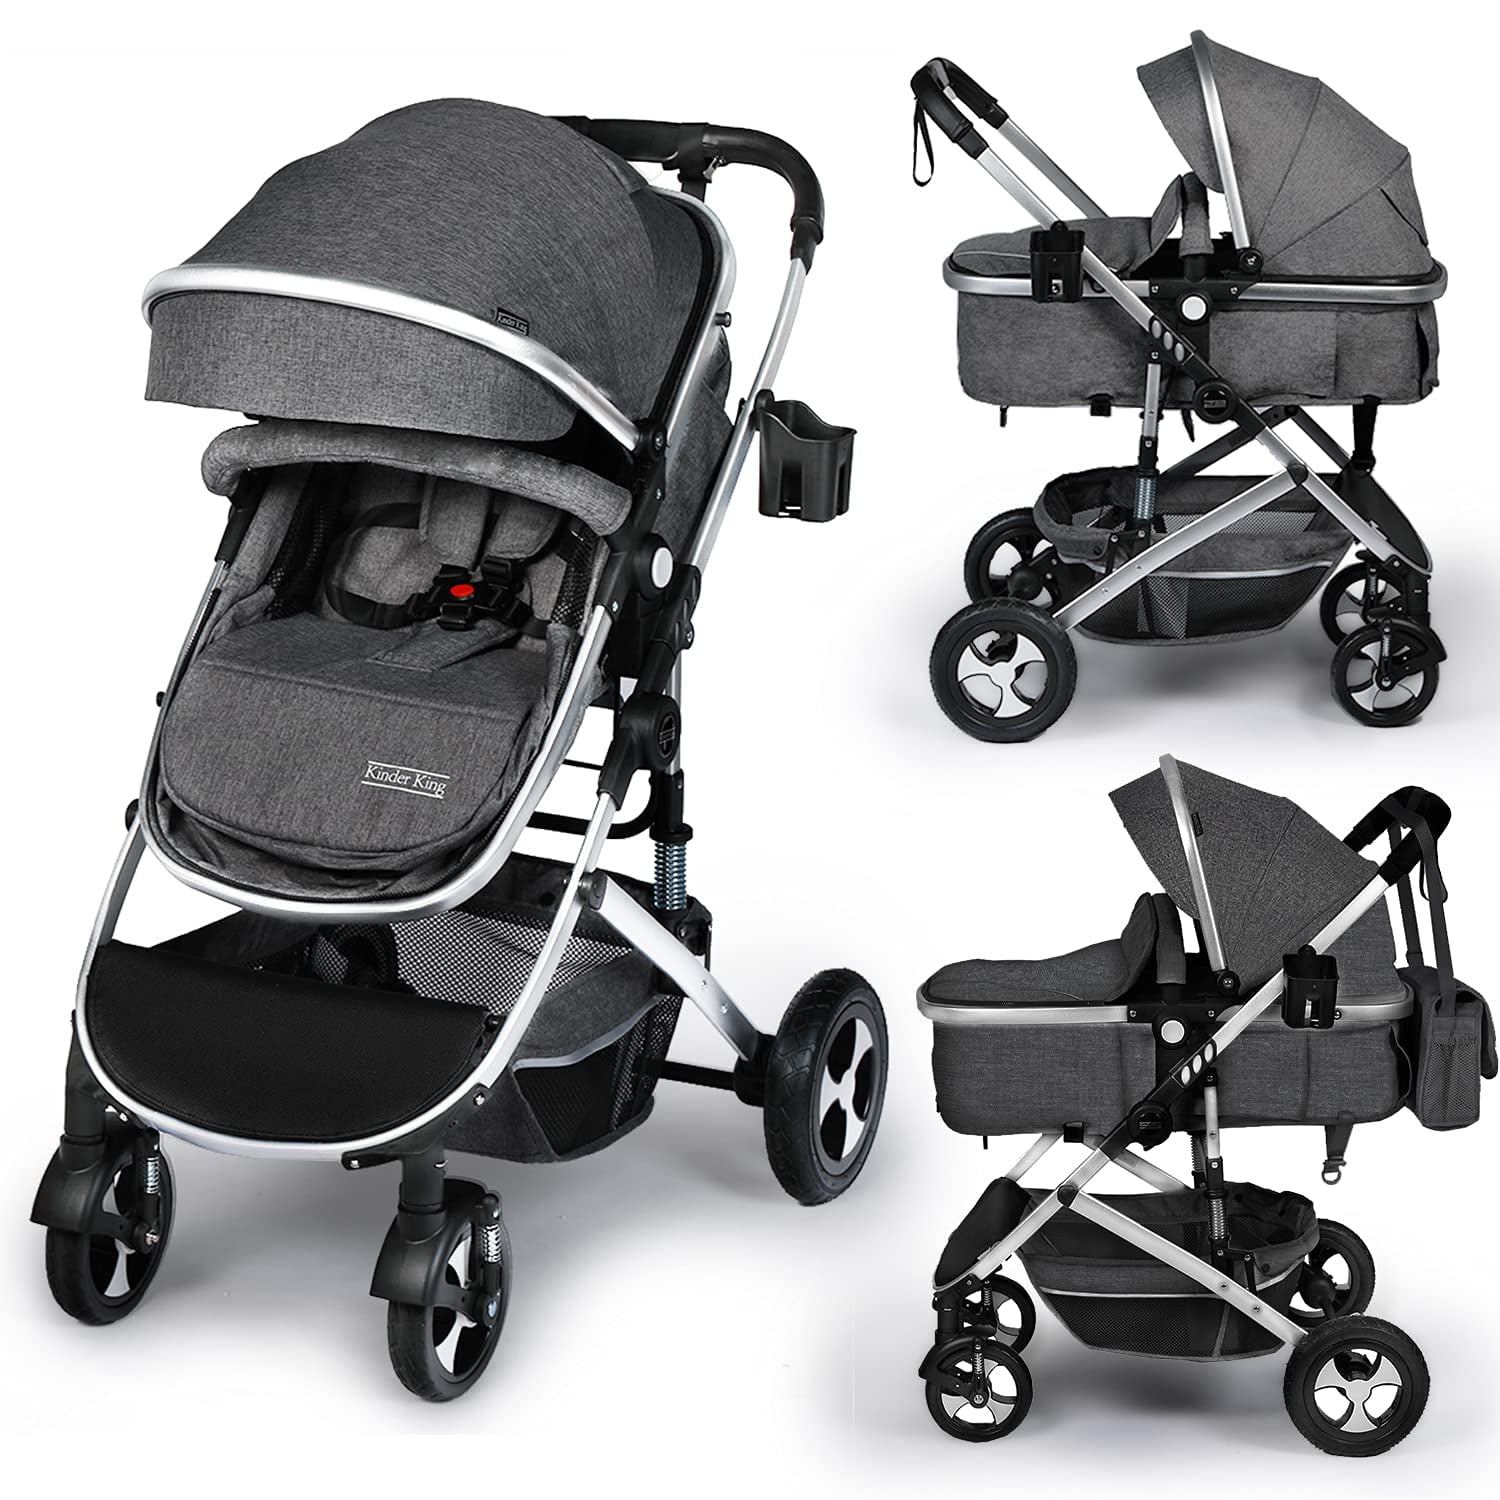 Color : Black Baby Travel System Newborn Stroller Baby Pushchair High Landscape Baby Stroller Toddler Stroller 3 in 1 Baby Pram Strollers for 0-36 Months Baby Trolley 